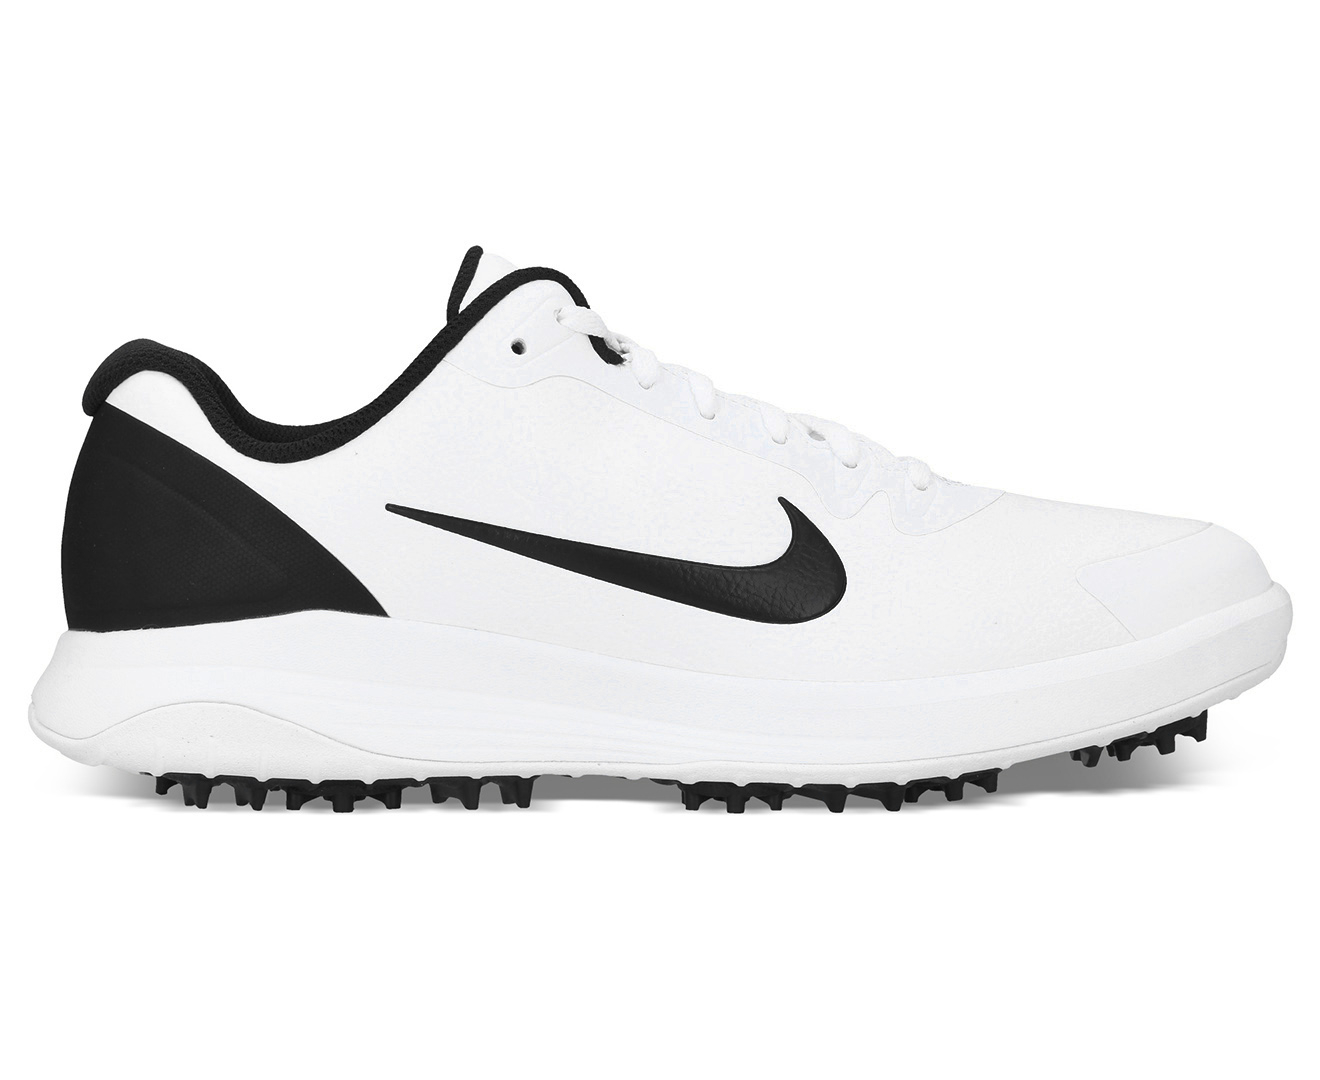 Nike Men's Infinity G Golf Shoes - White/Black | Www.catch.co.nz